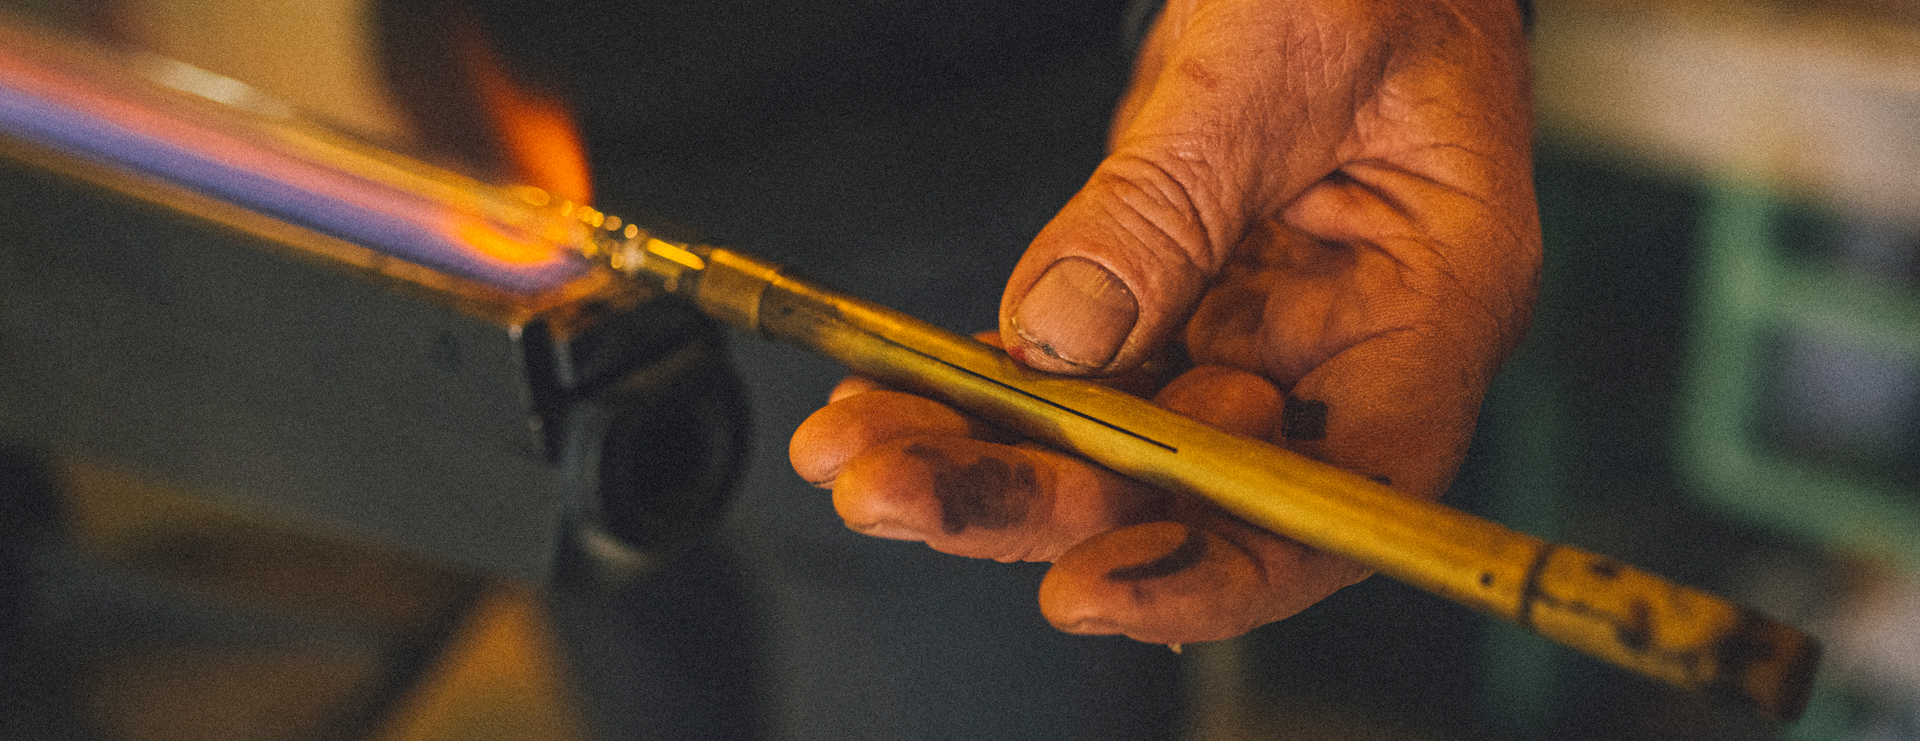 A close up of Matt shaping a glass tube.